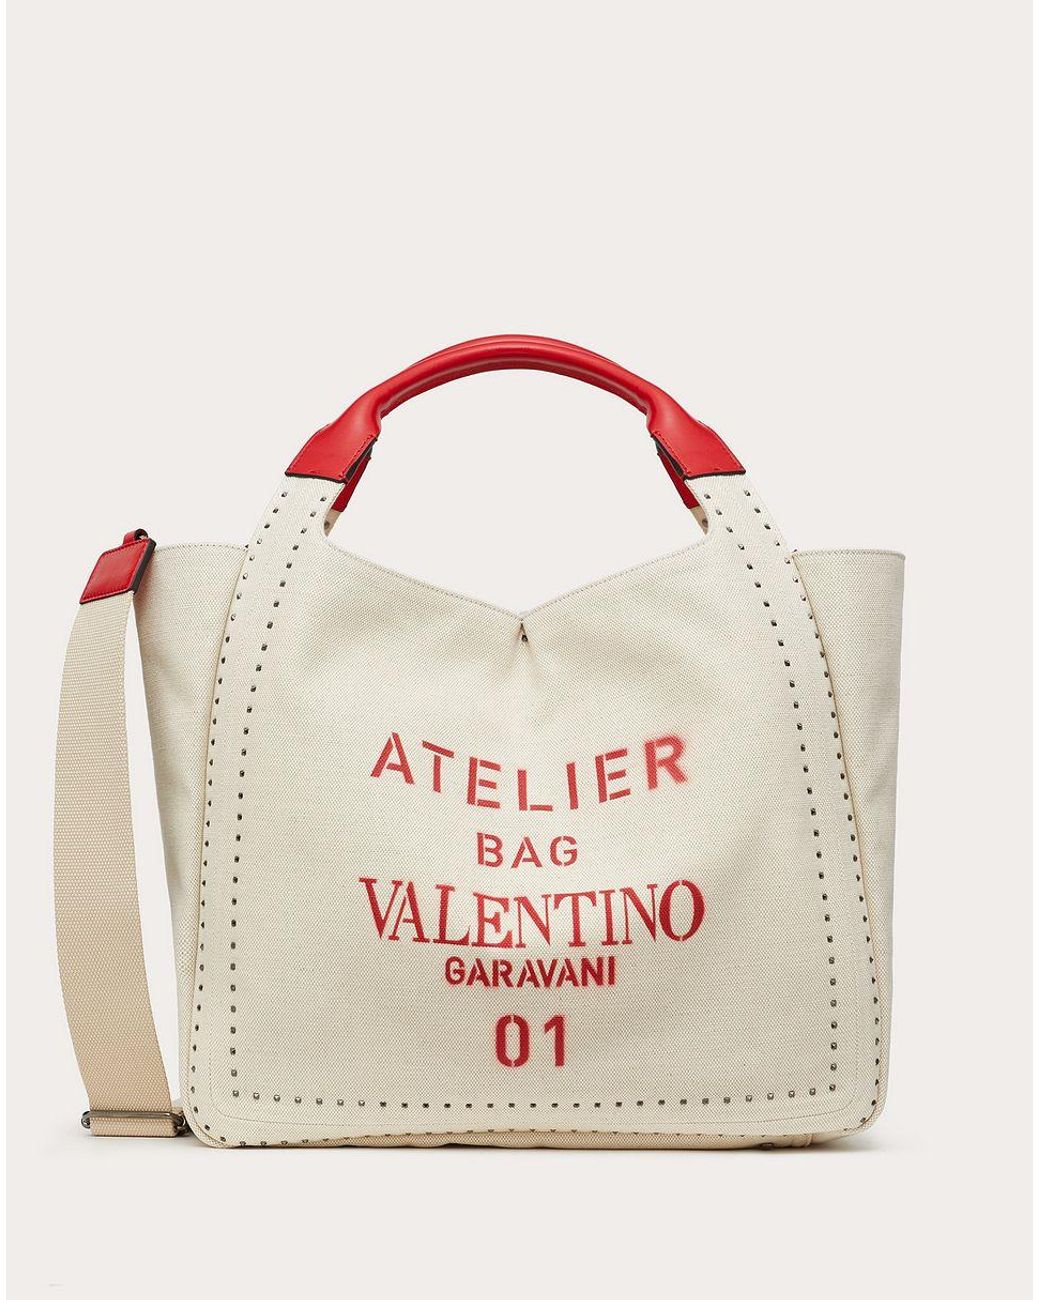 Valentino Garavani Large Atelier Bag 01 Metal Stitch Edition Tote in  Natural | Lyst